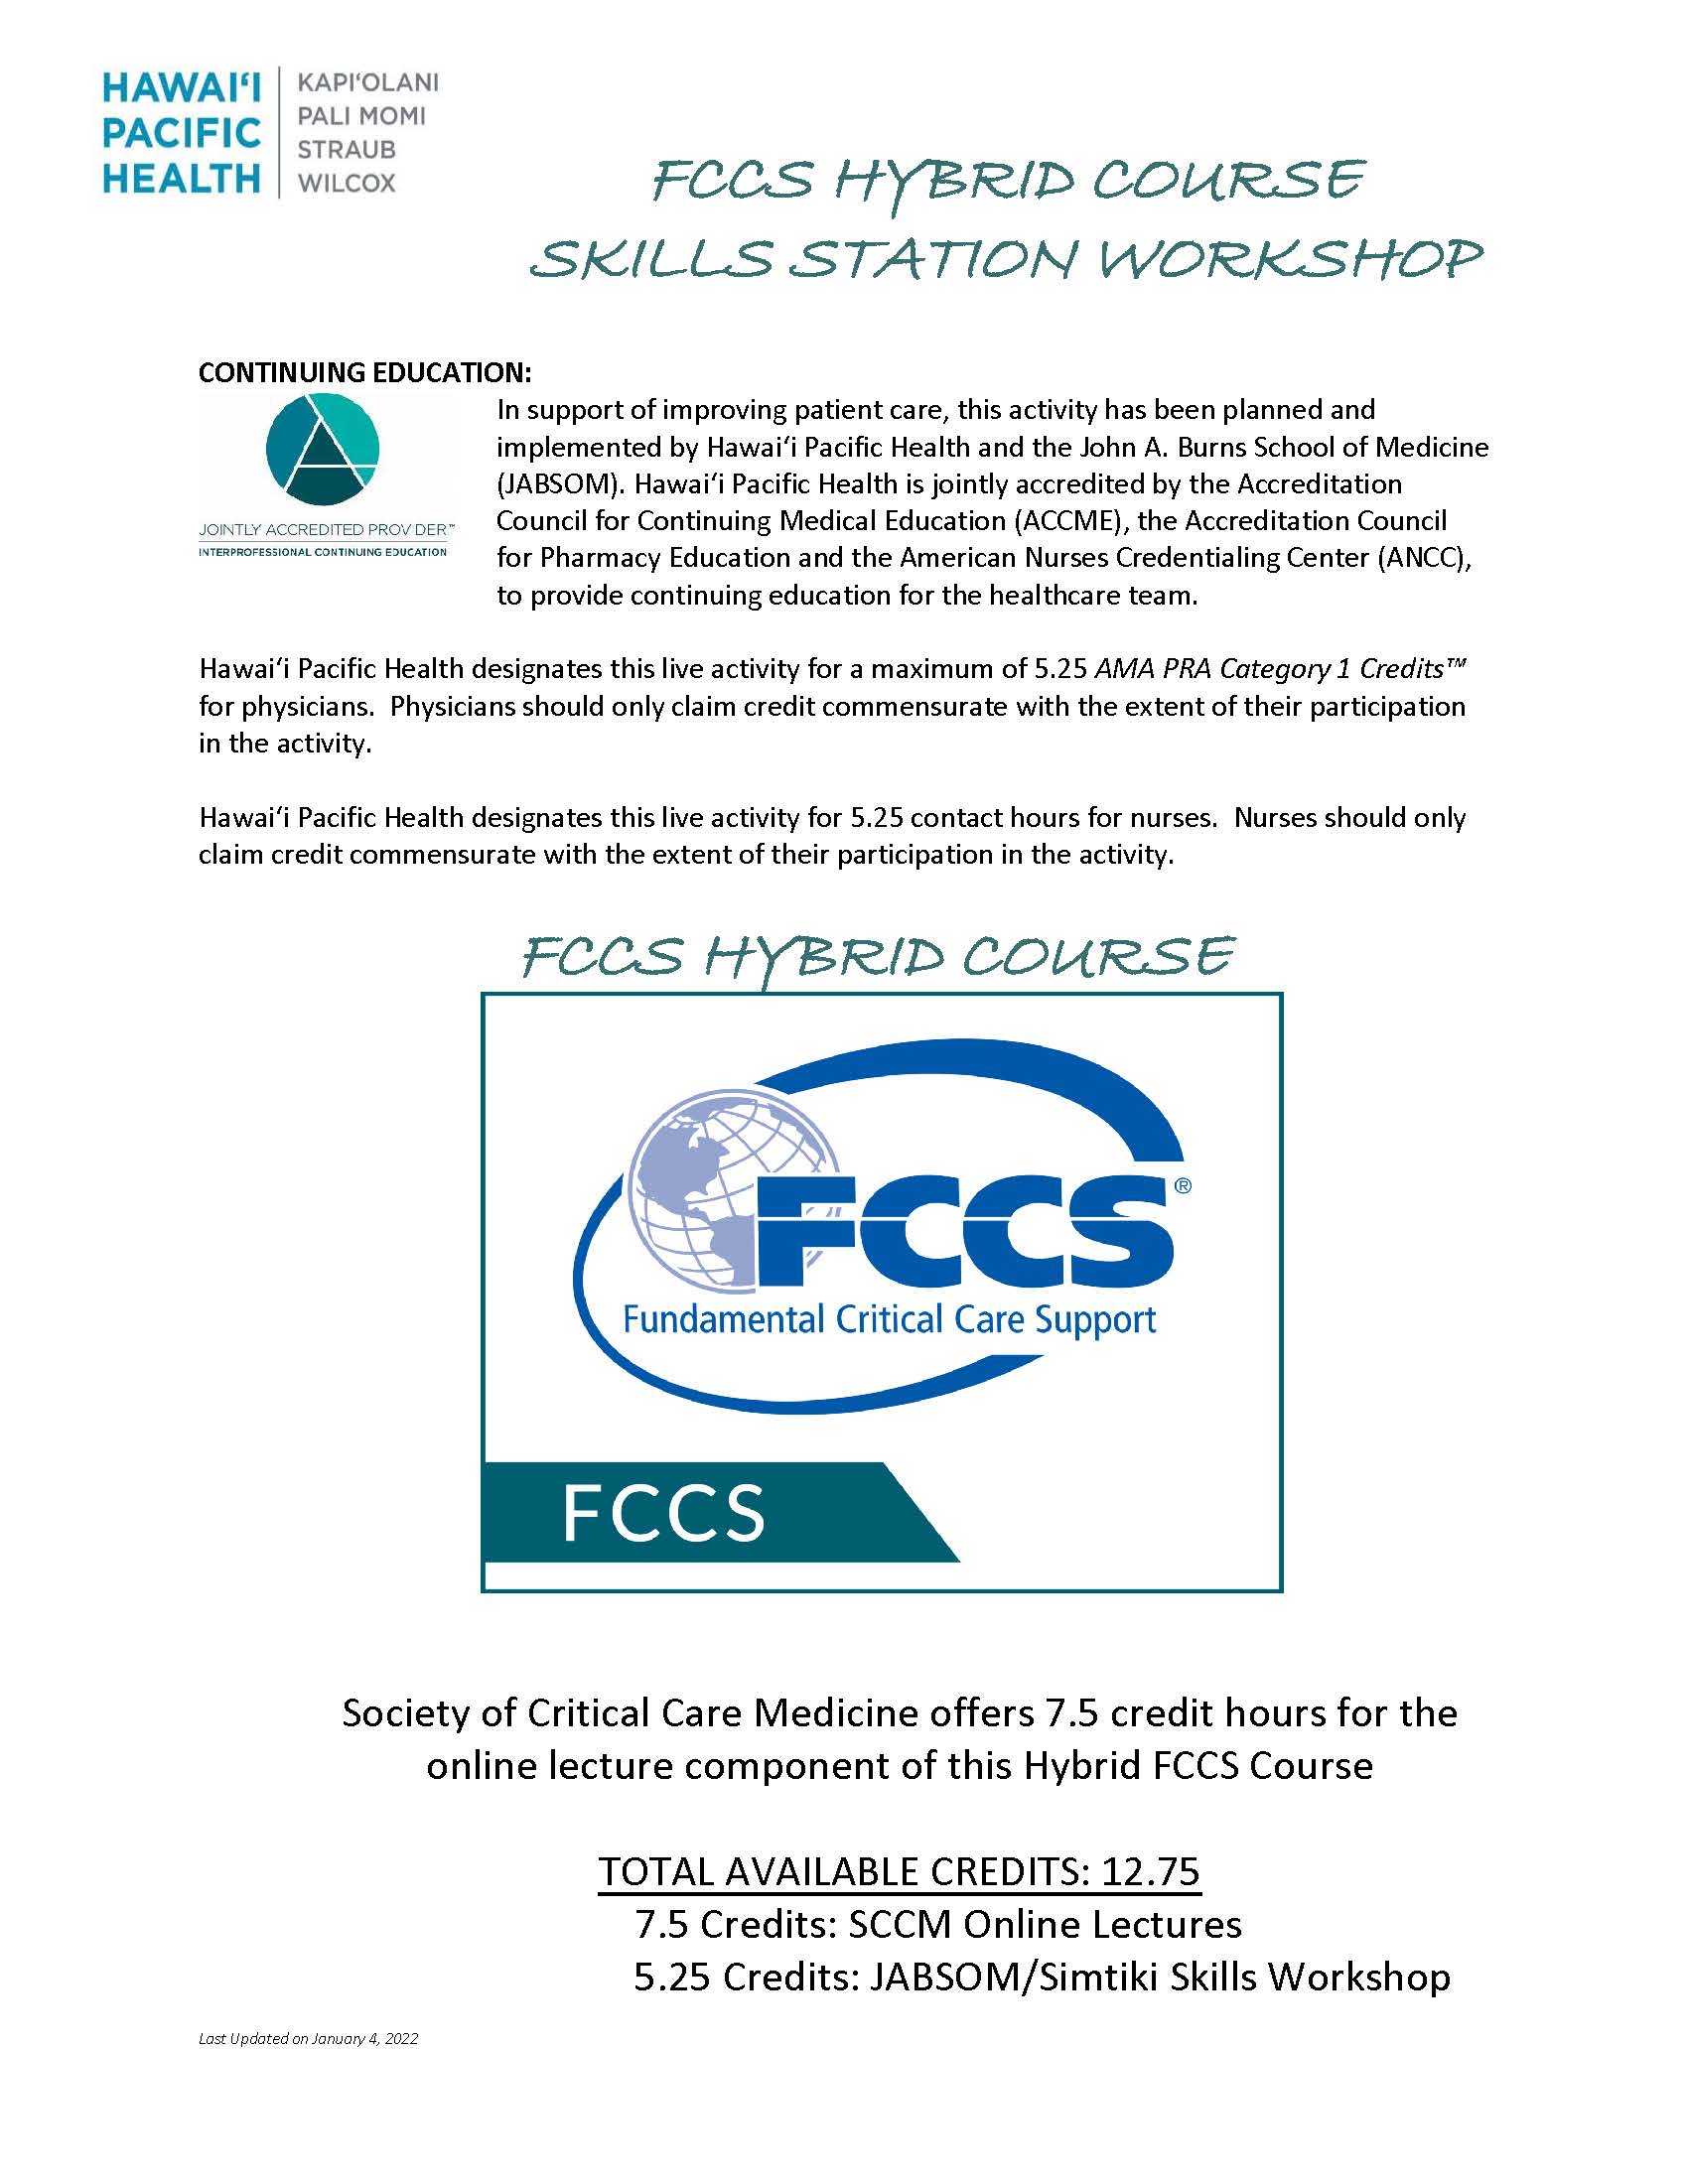 FCCS Hybrid Flyer